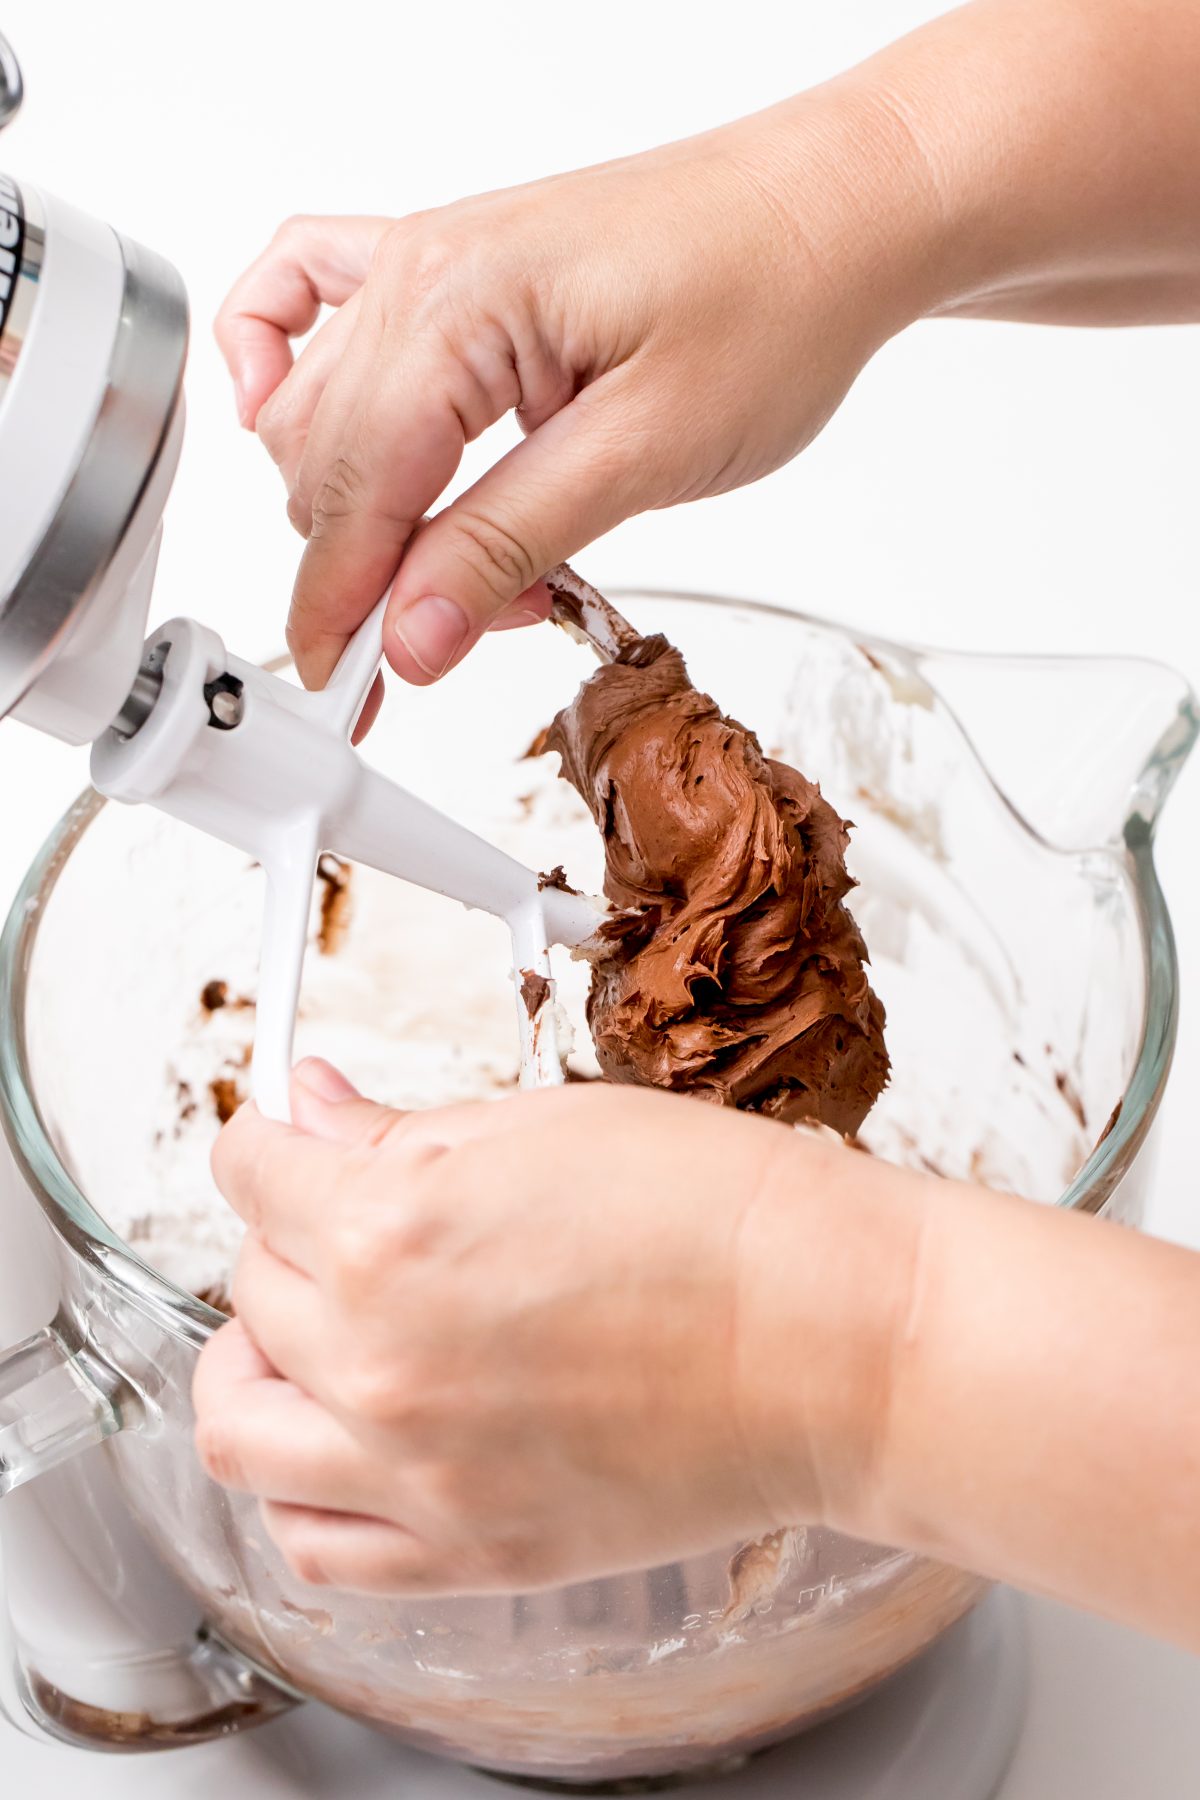 Combine butter, powdered sugar, vanilla, heavy cream and cocoa powder to make smooth chocolate buttercream